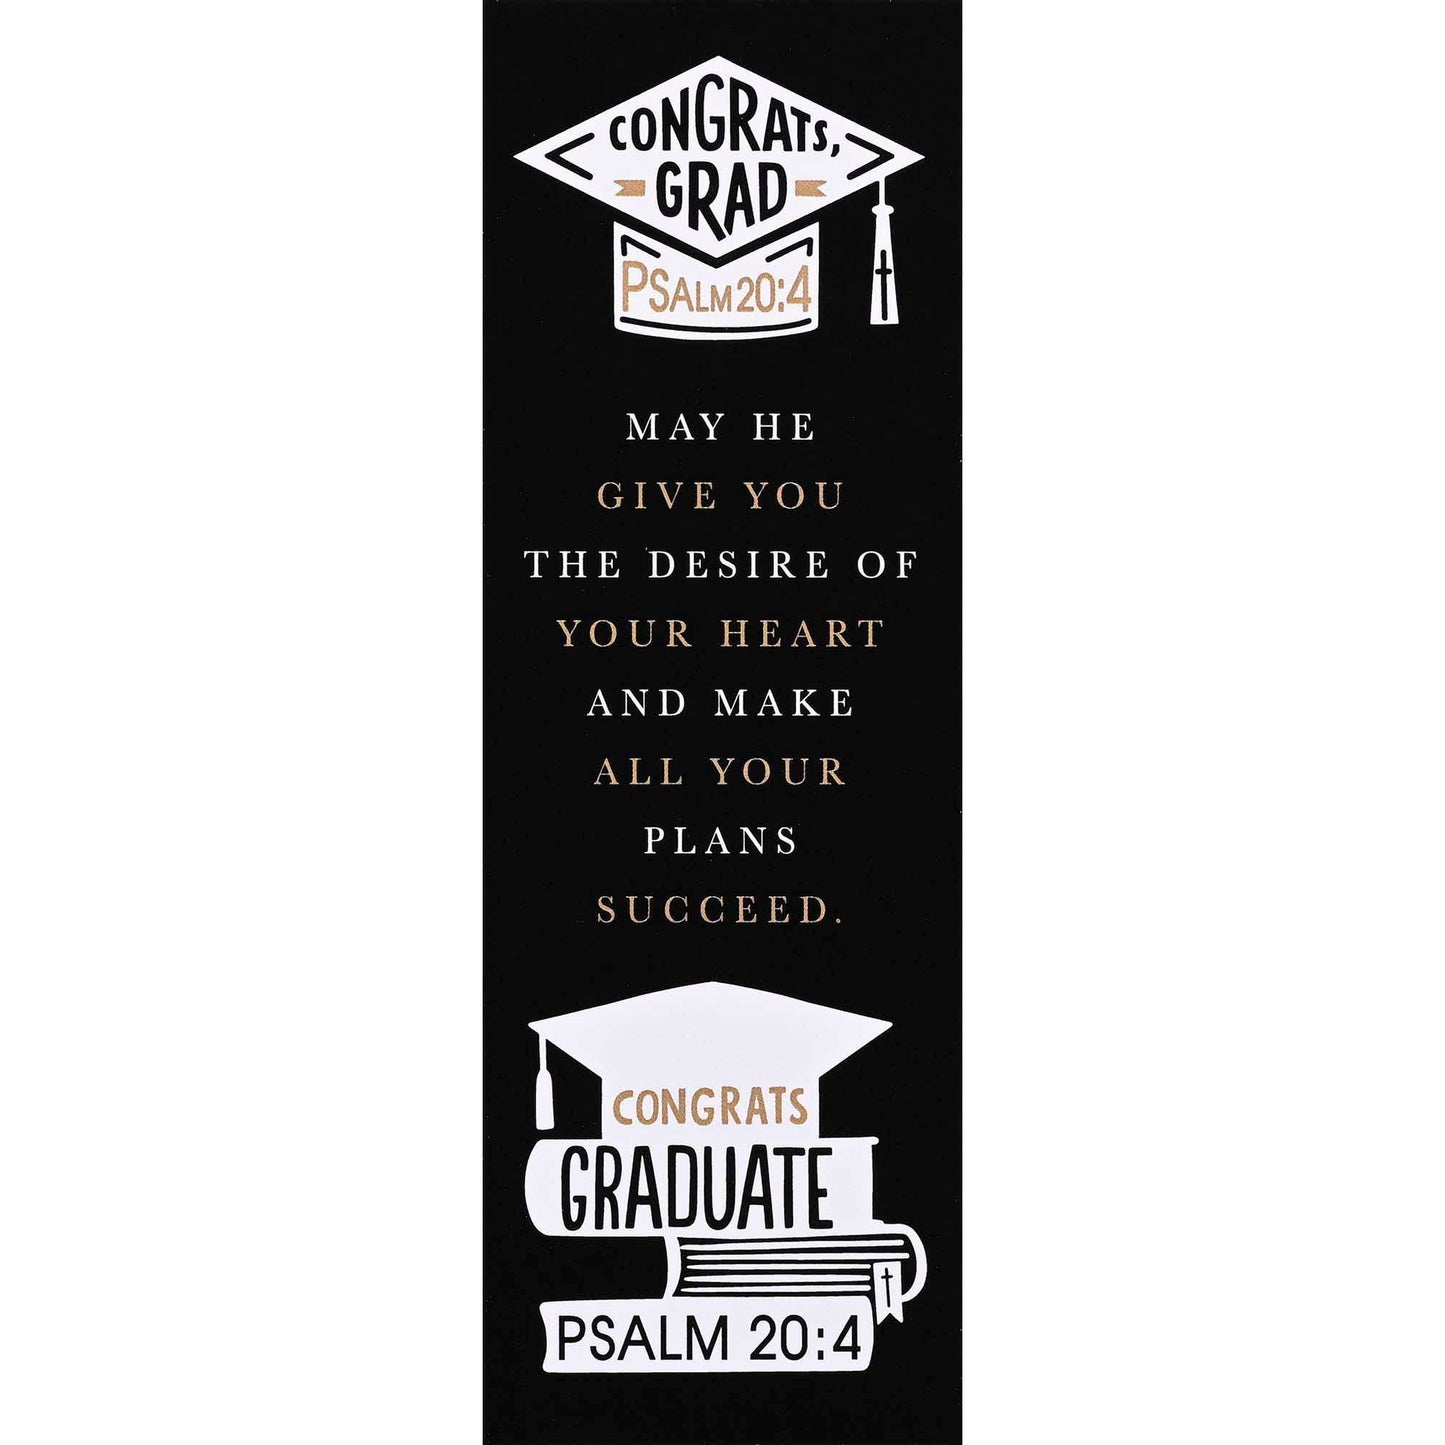 Dicksons -Congrats Graduate Ps.20:4